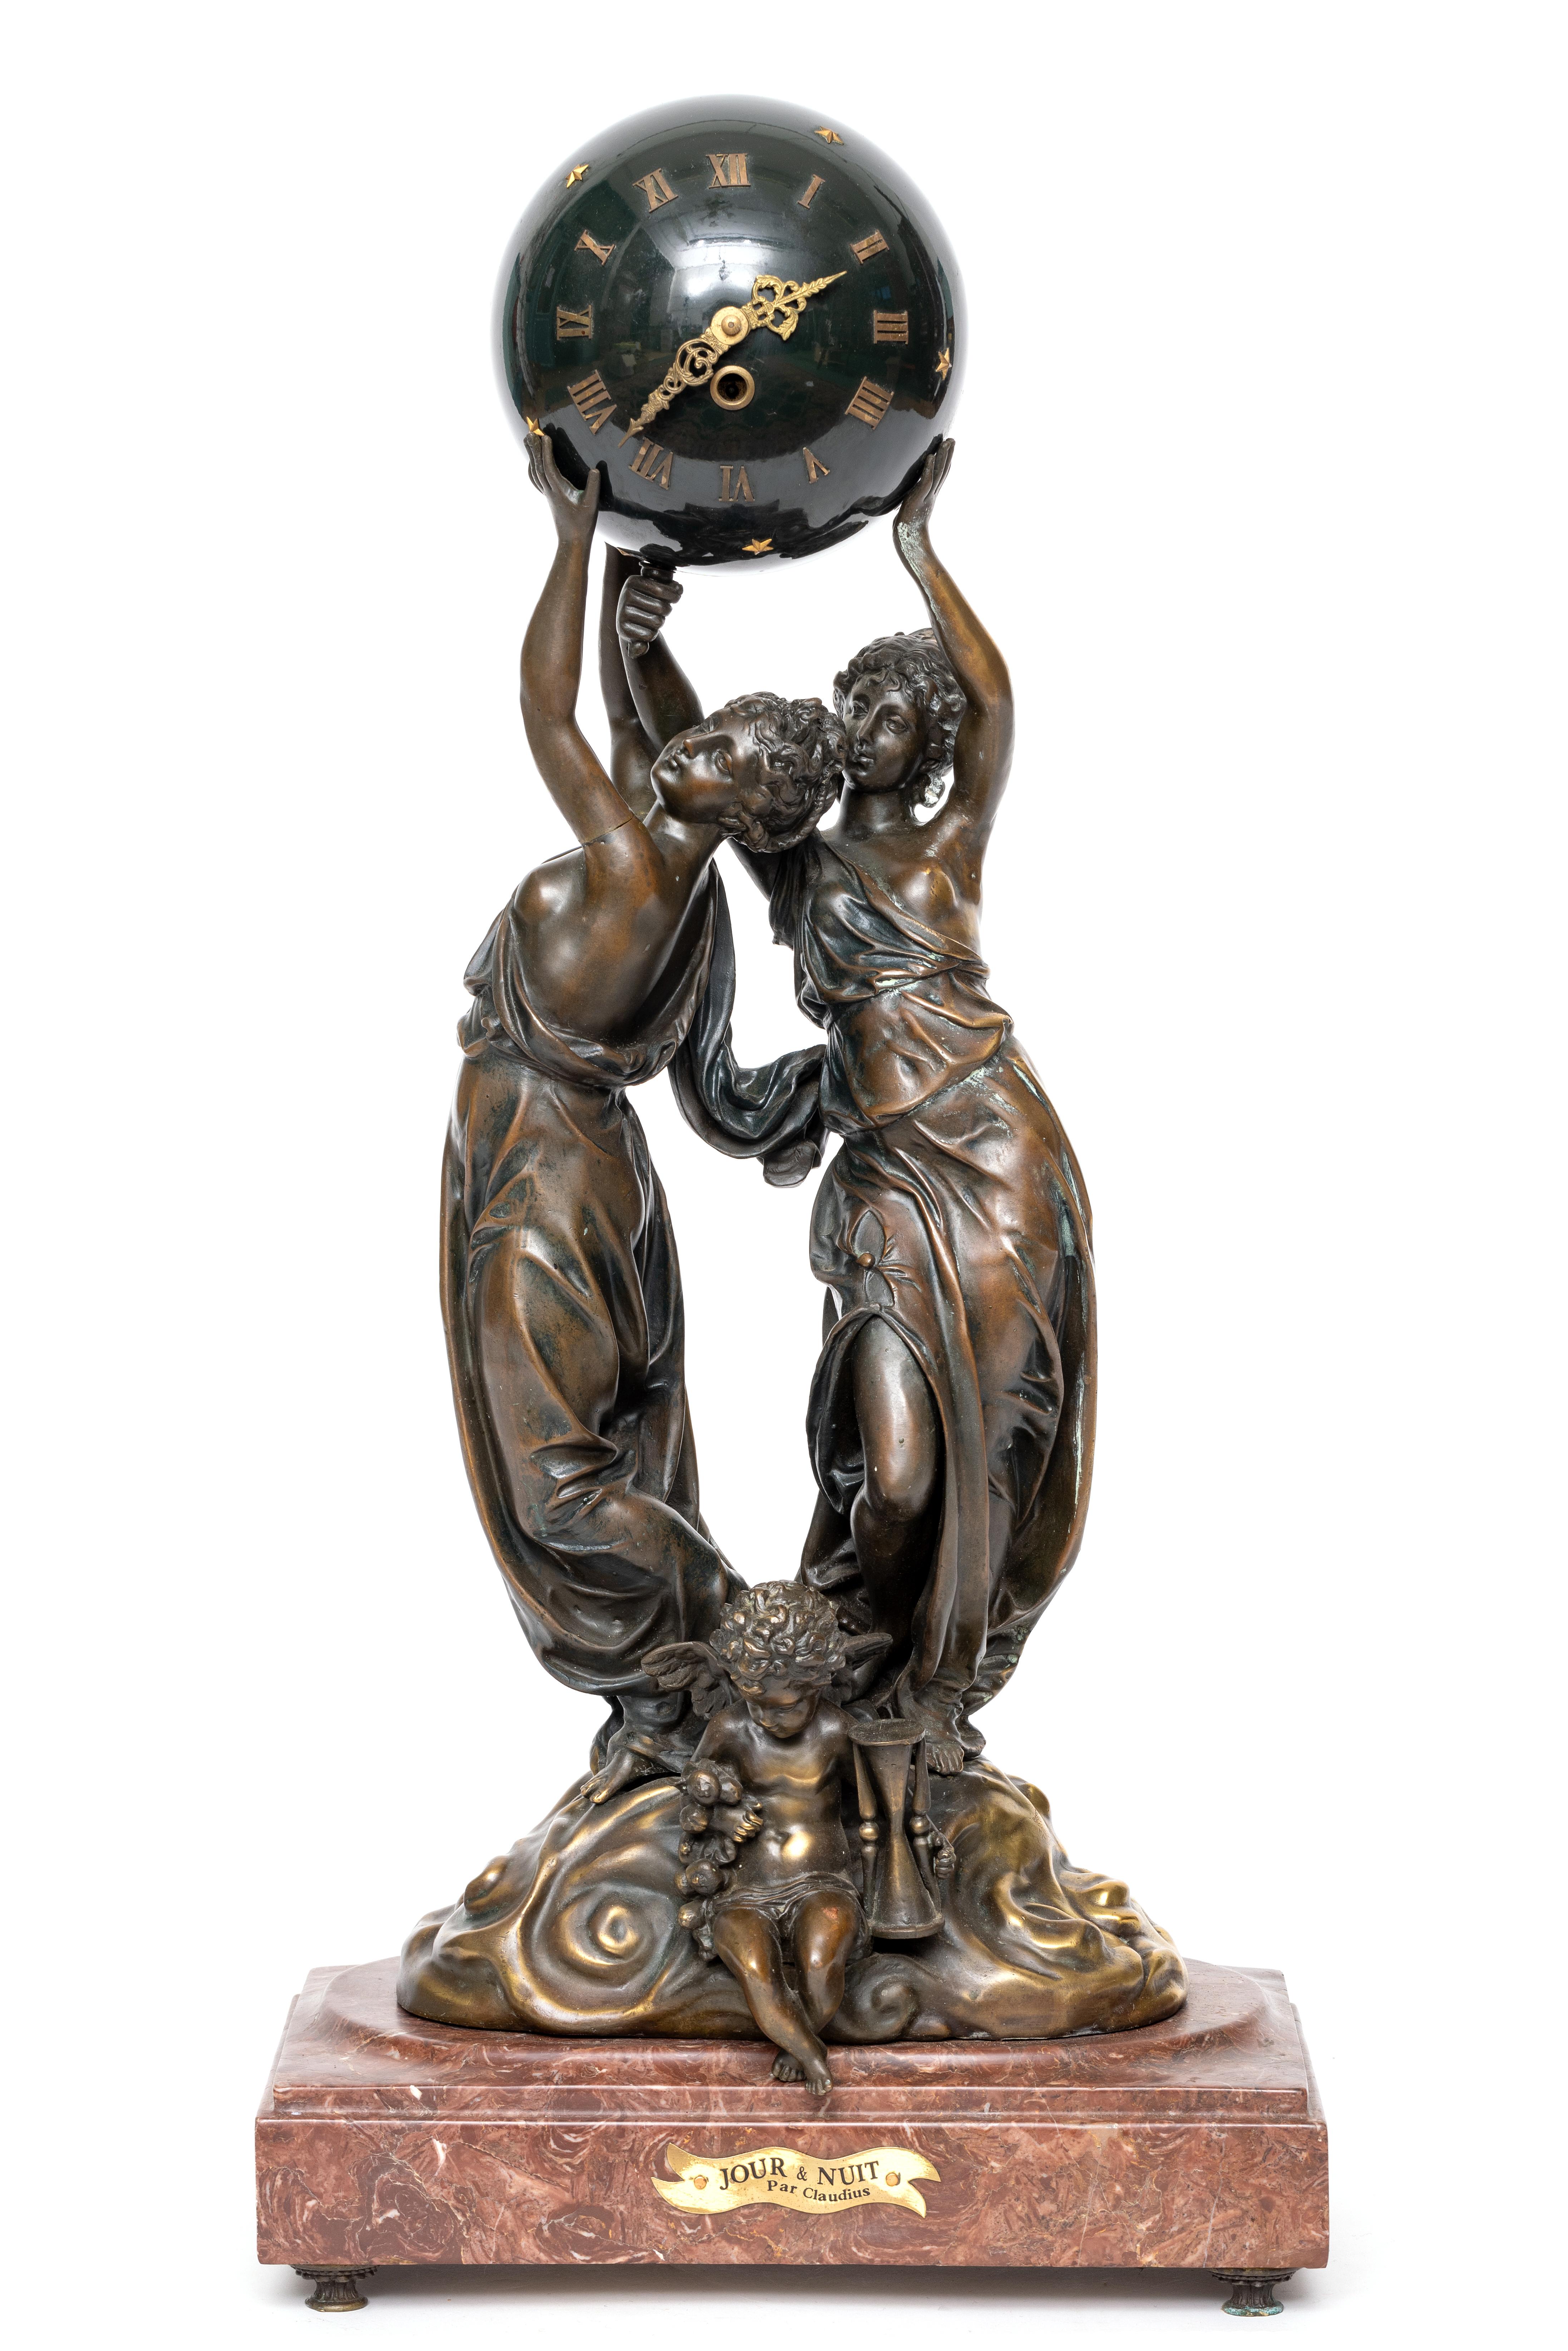 Frankrijk, bruin gepatineerde bronslegering pendule, 'Jour & Nuit', ca. 1900;